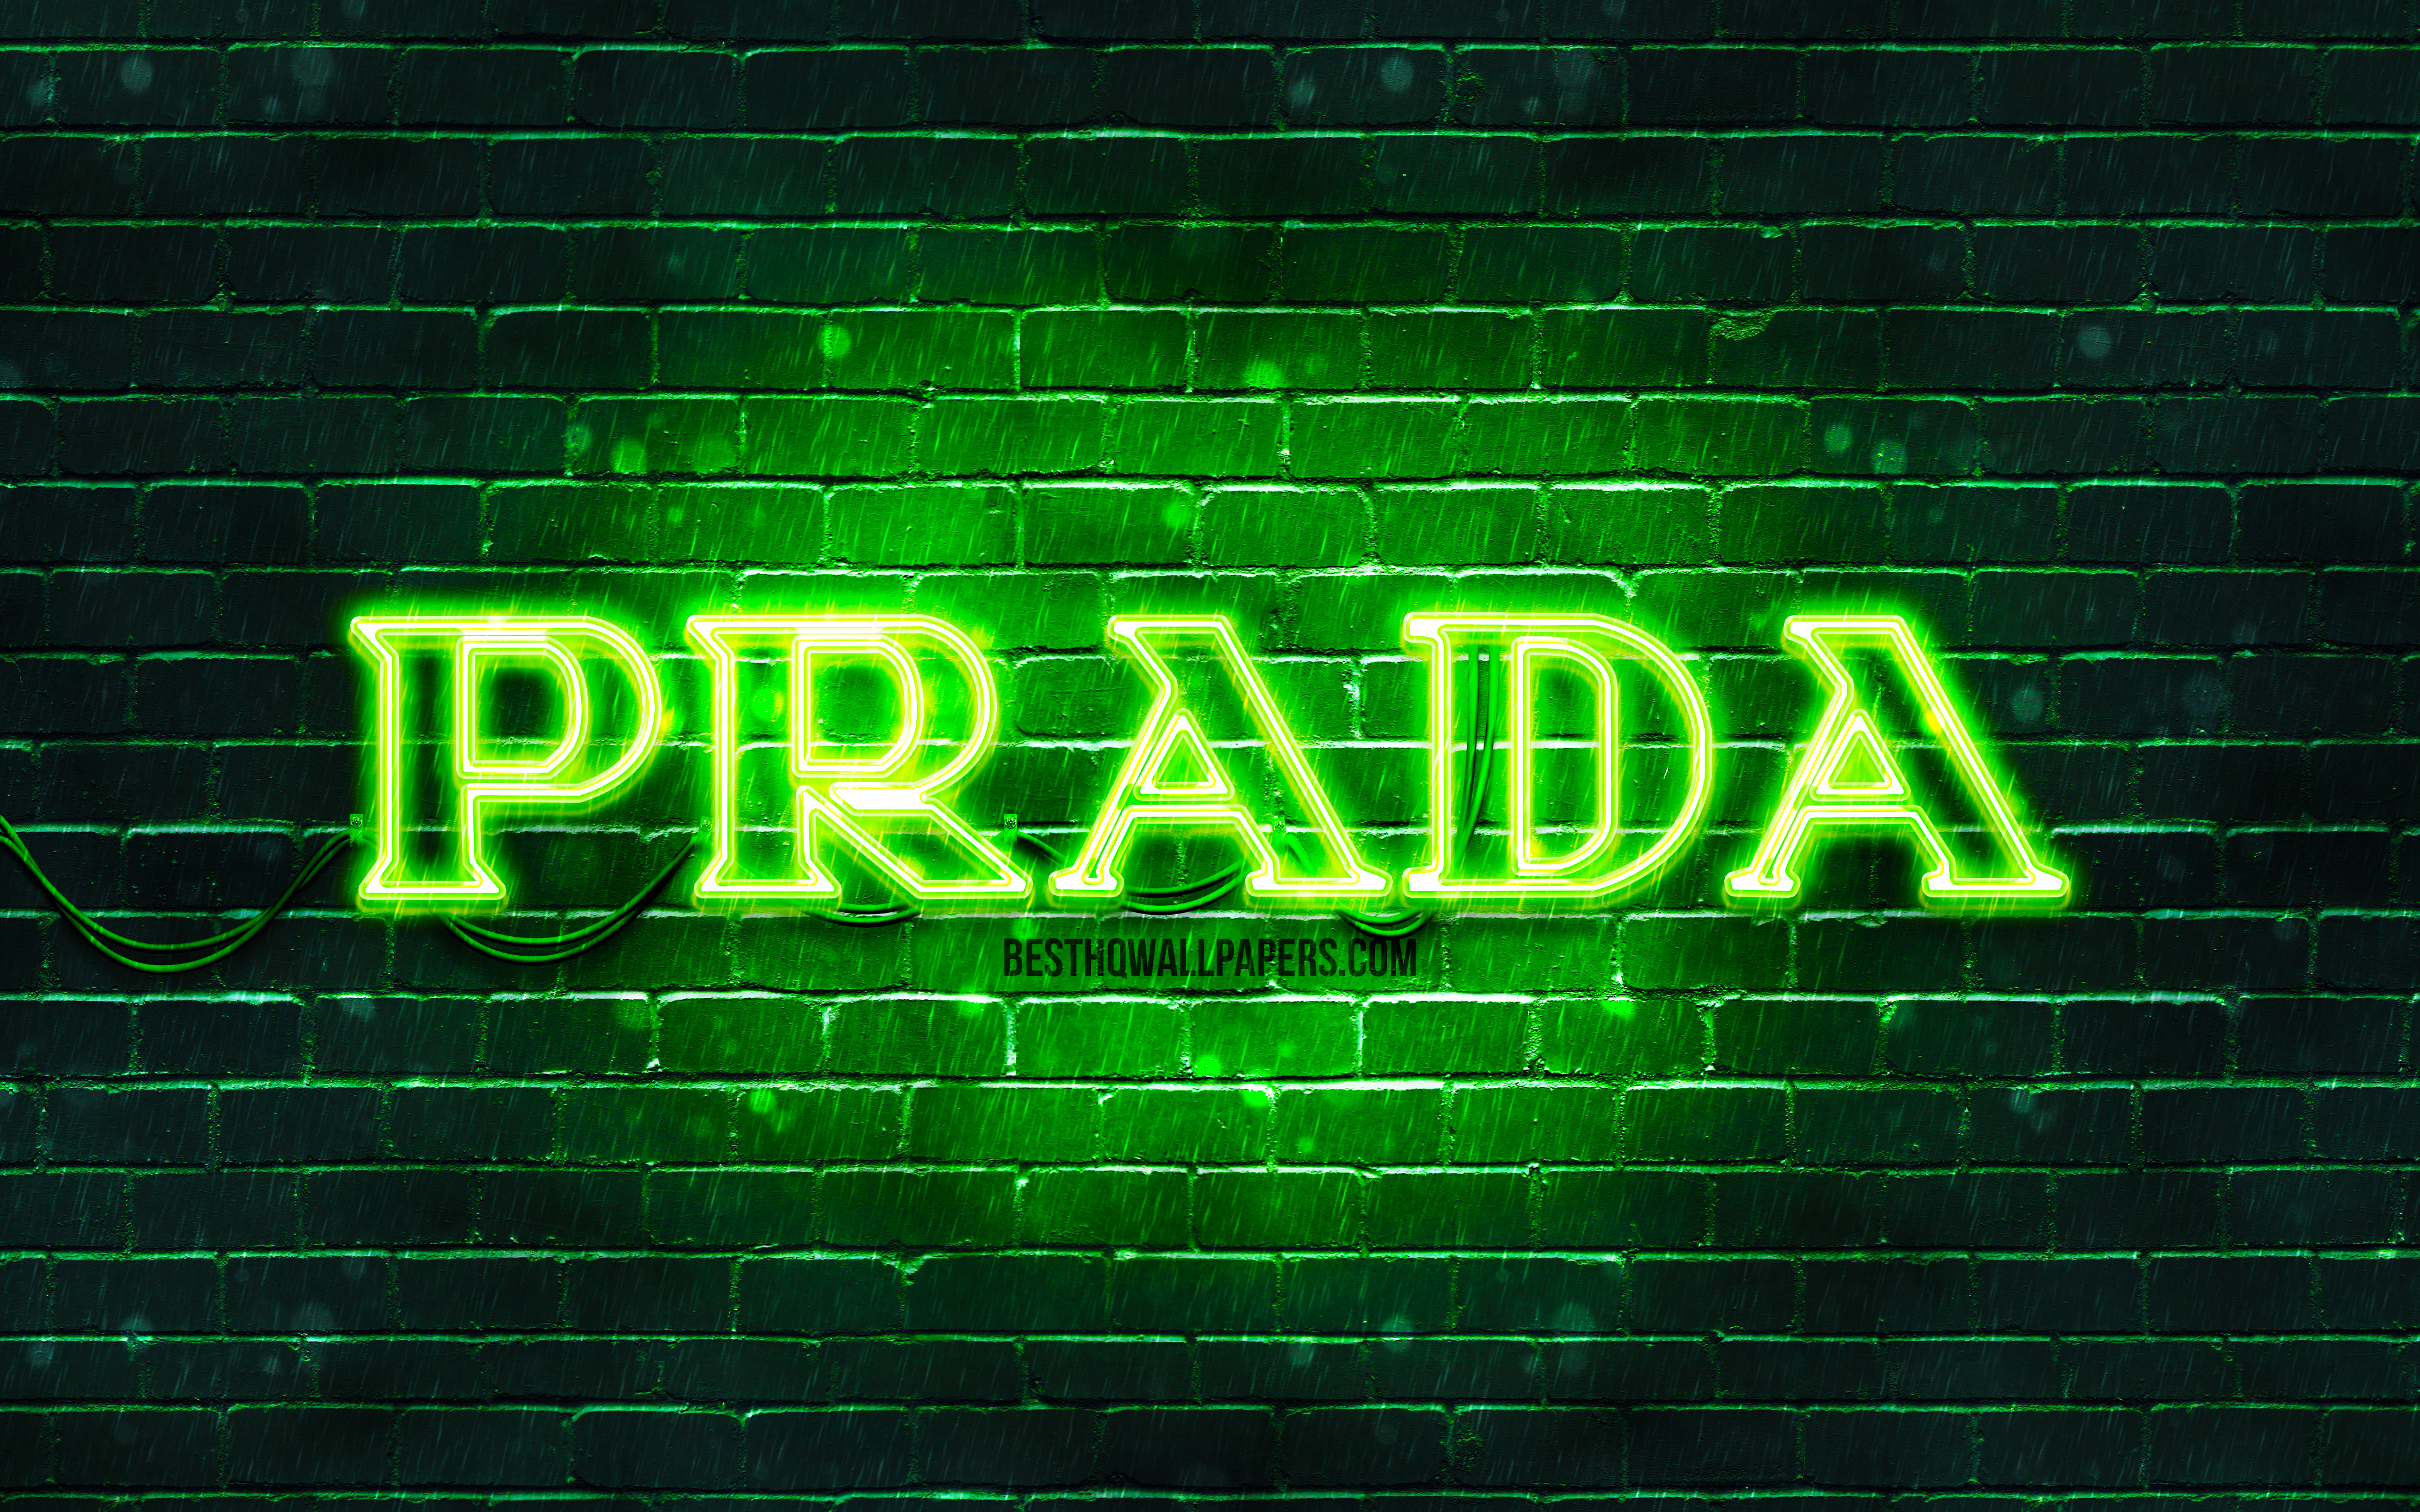 Download wallpaper Prada green logo, 4k, green brickwall, Prada logo, fashion brands, Prada neon logo, Prada for desktop with resolution 3840x2400. High Quality HD picture wallpaper